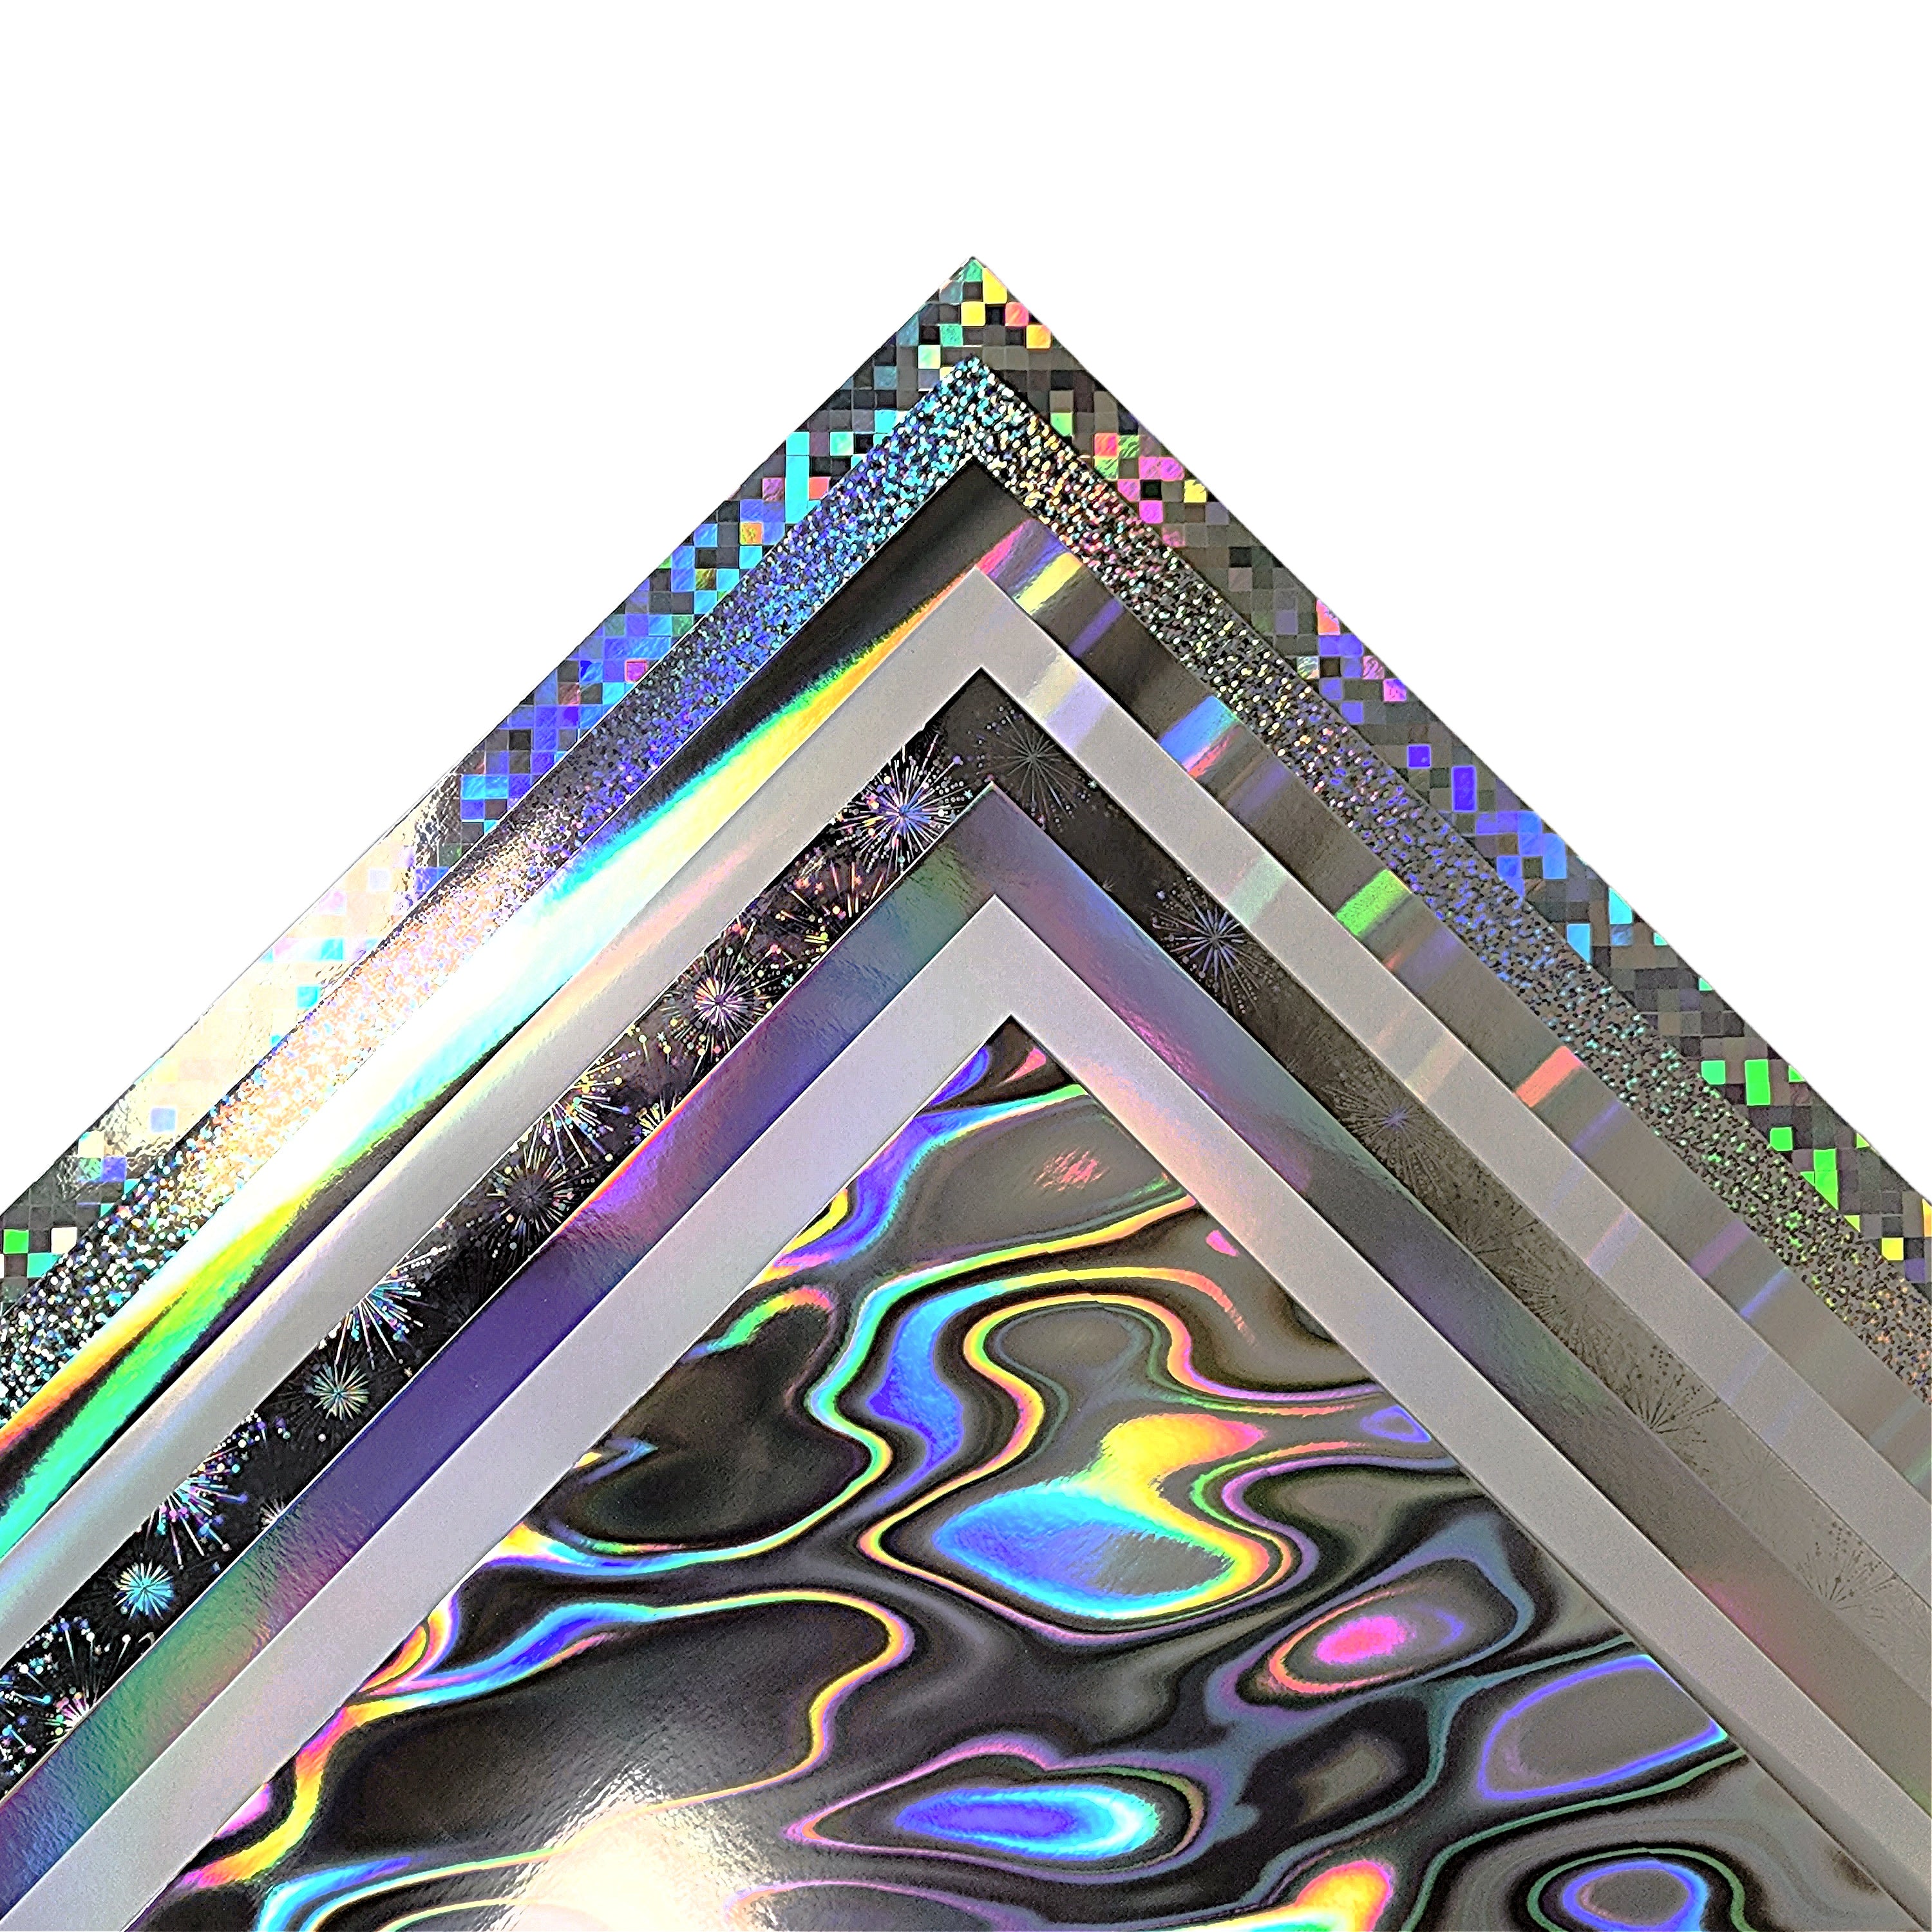 SILVER RAINBOW Holographic - 12x12 Cardstock - Mirri